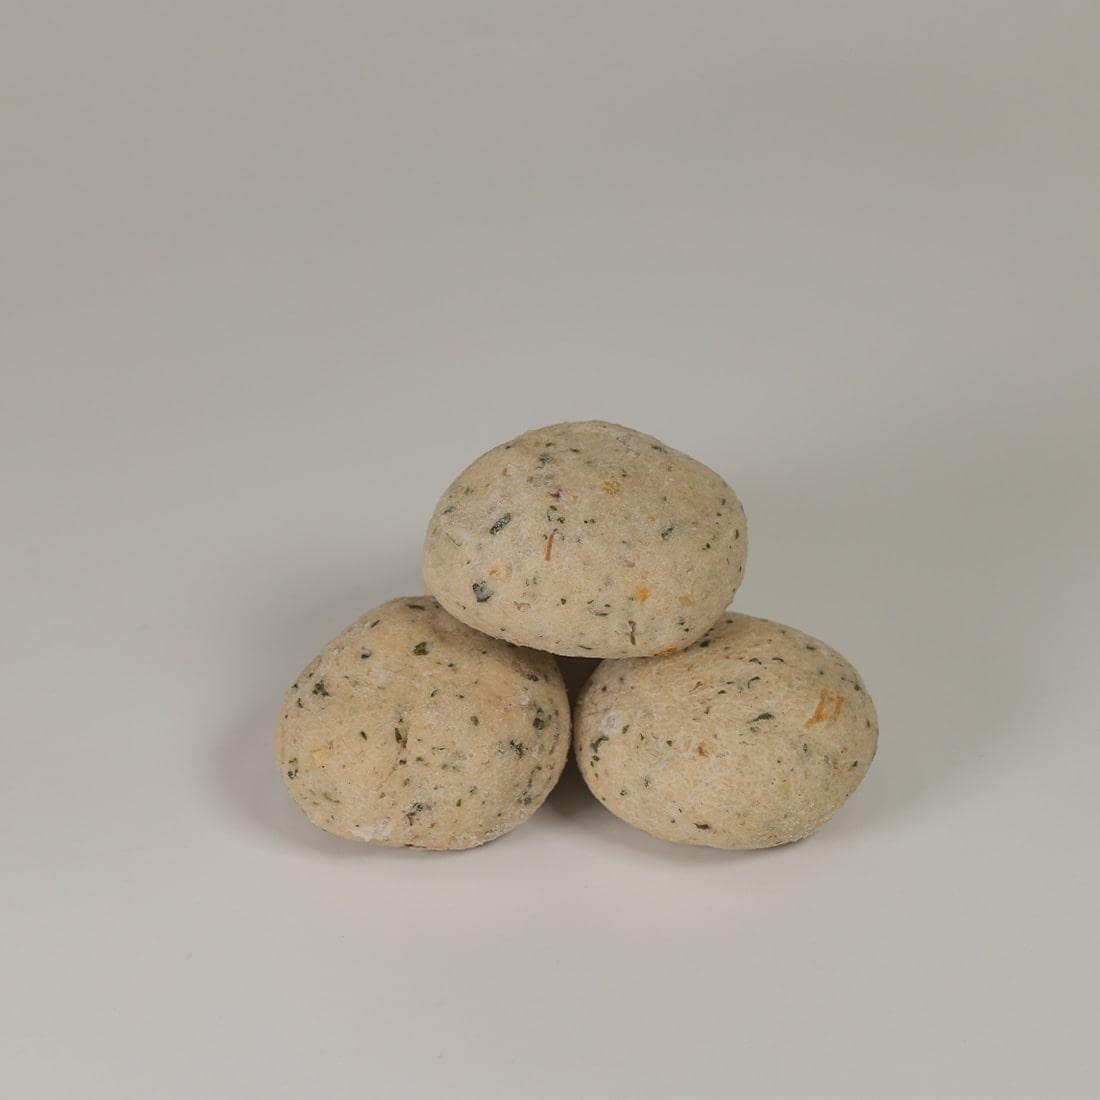 Image 0 of Grouper balls